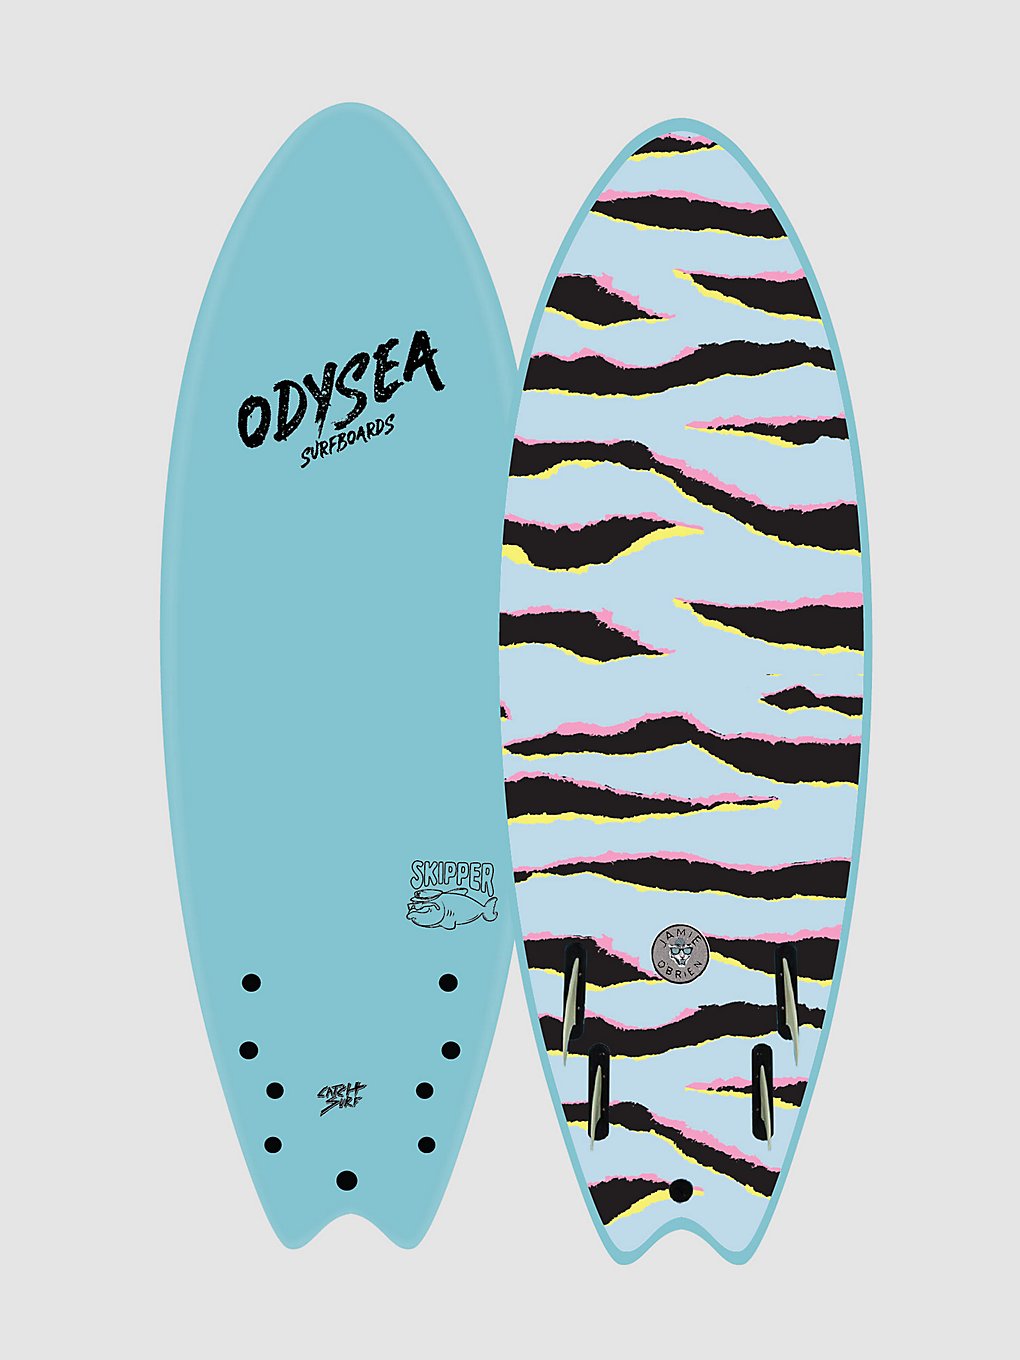 Catch Surf Odysea Skipper Pro Job Quad 5'6 Softtop Surfboard sky blue sk22